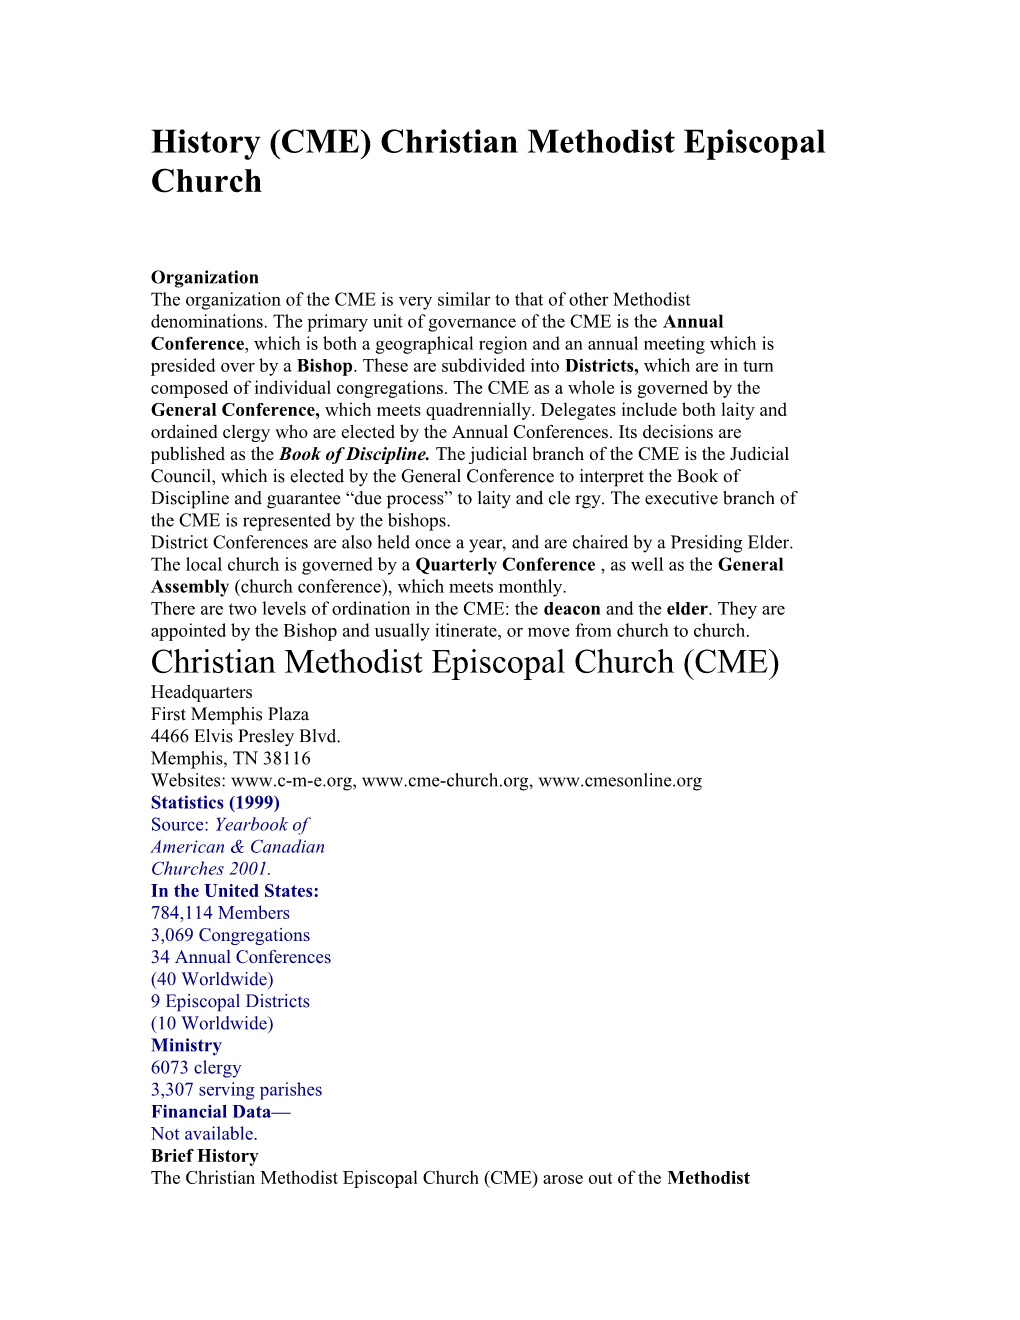 History (CME) Christian Methodist Episcopal Church